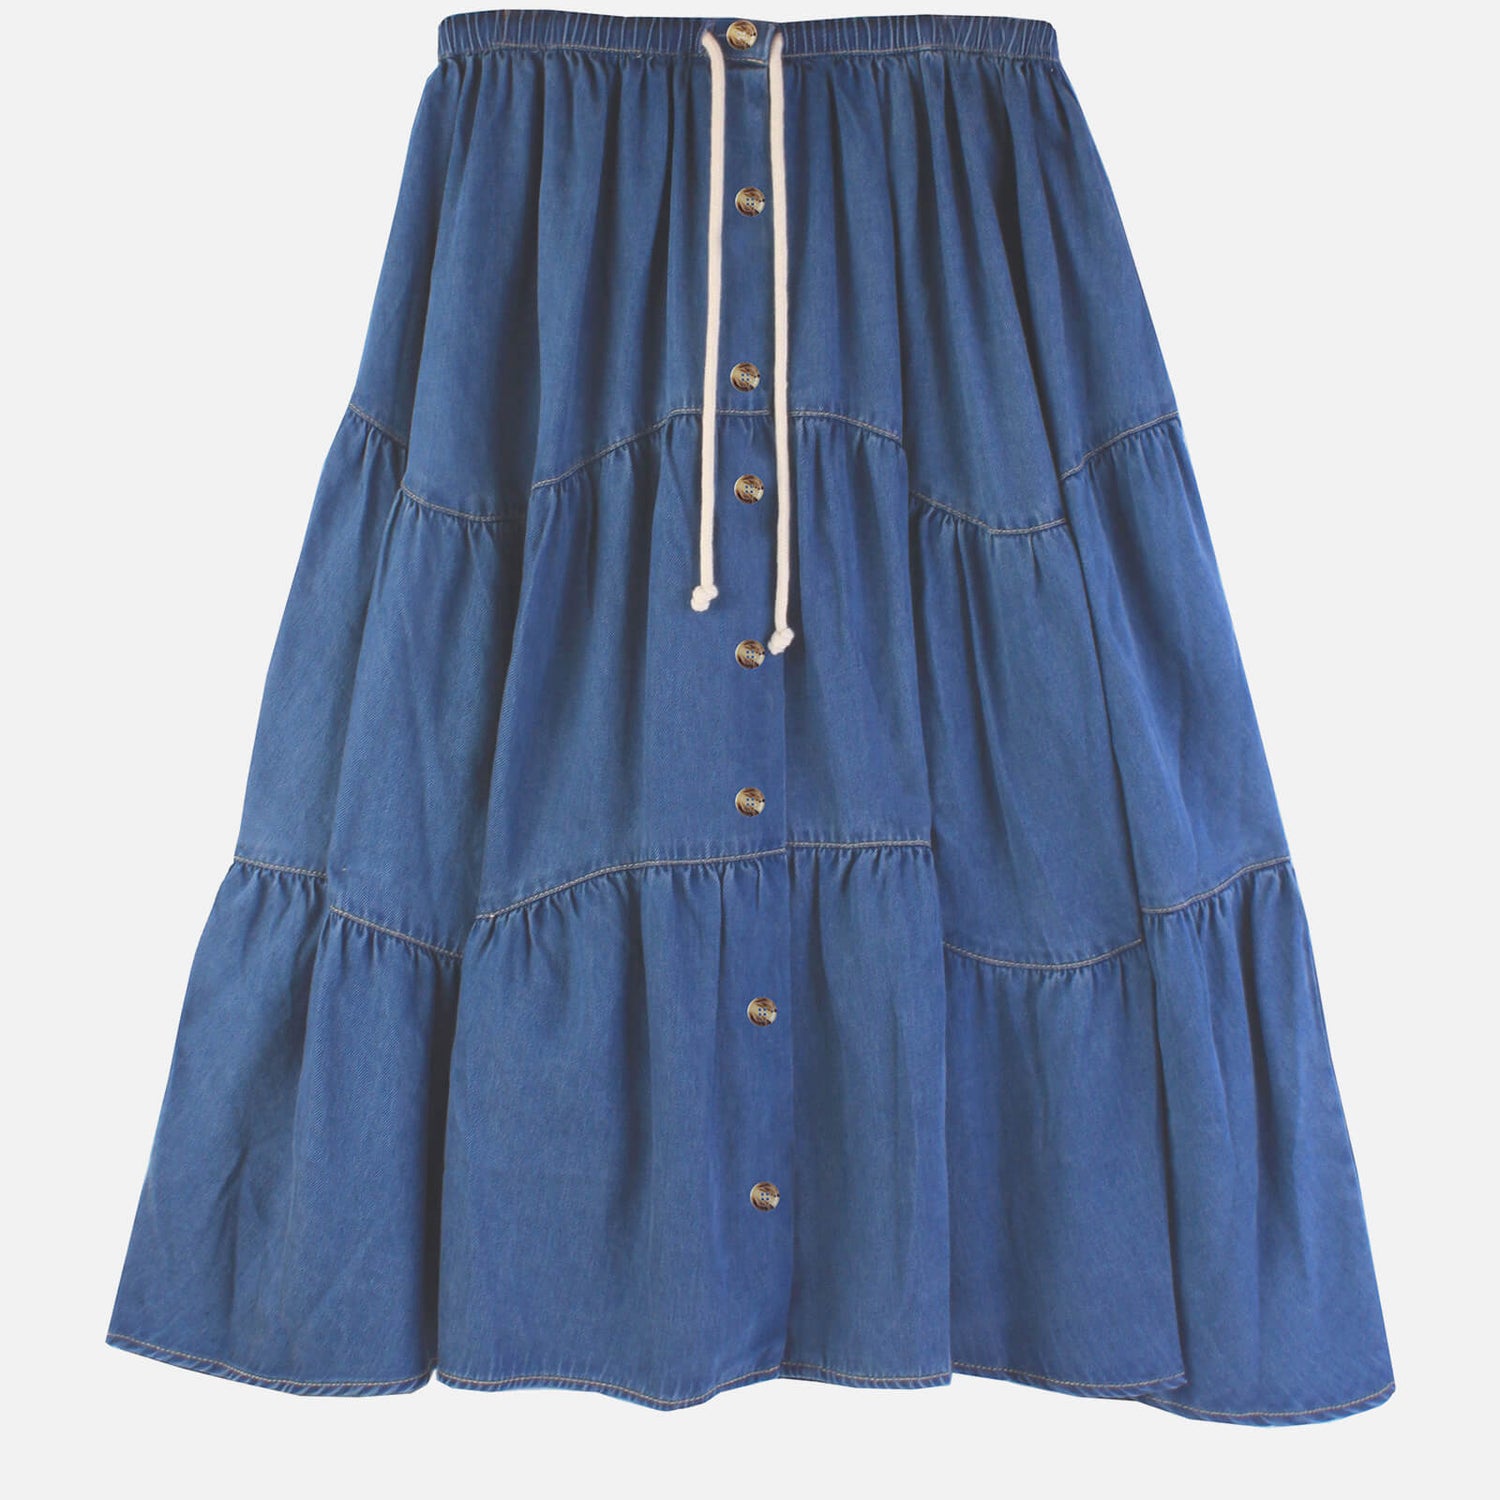 Meadows Women's Thyme Skirt - Chambray - UK 10